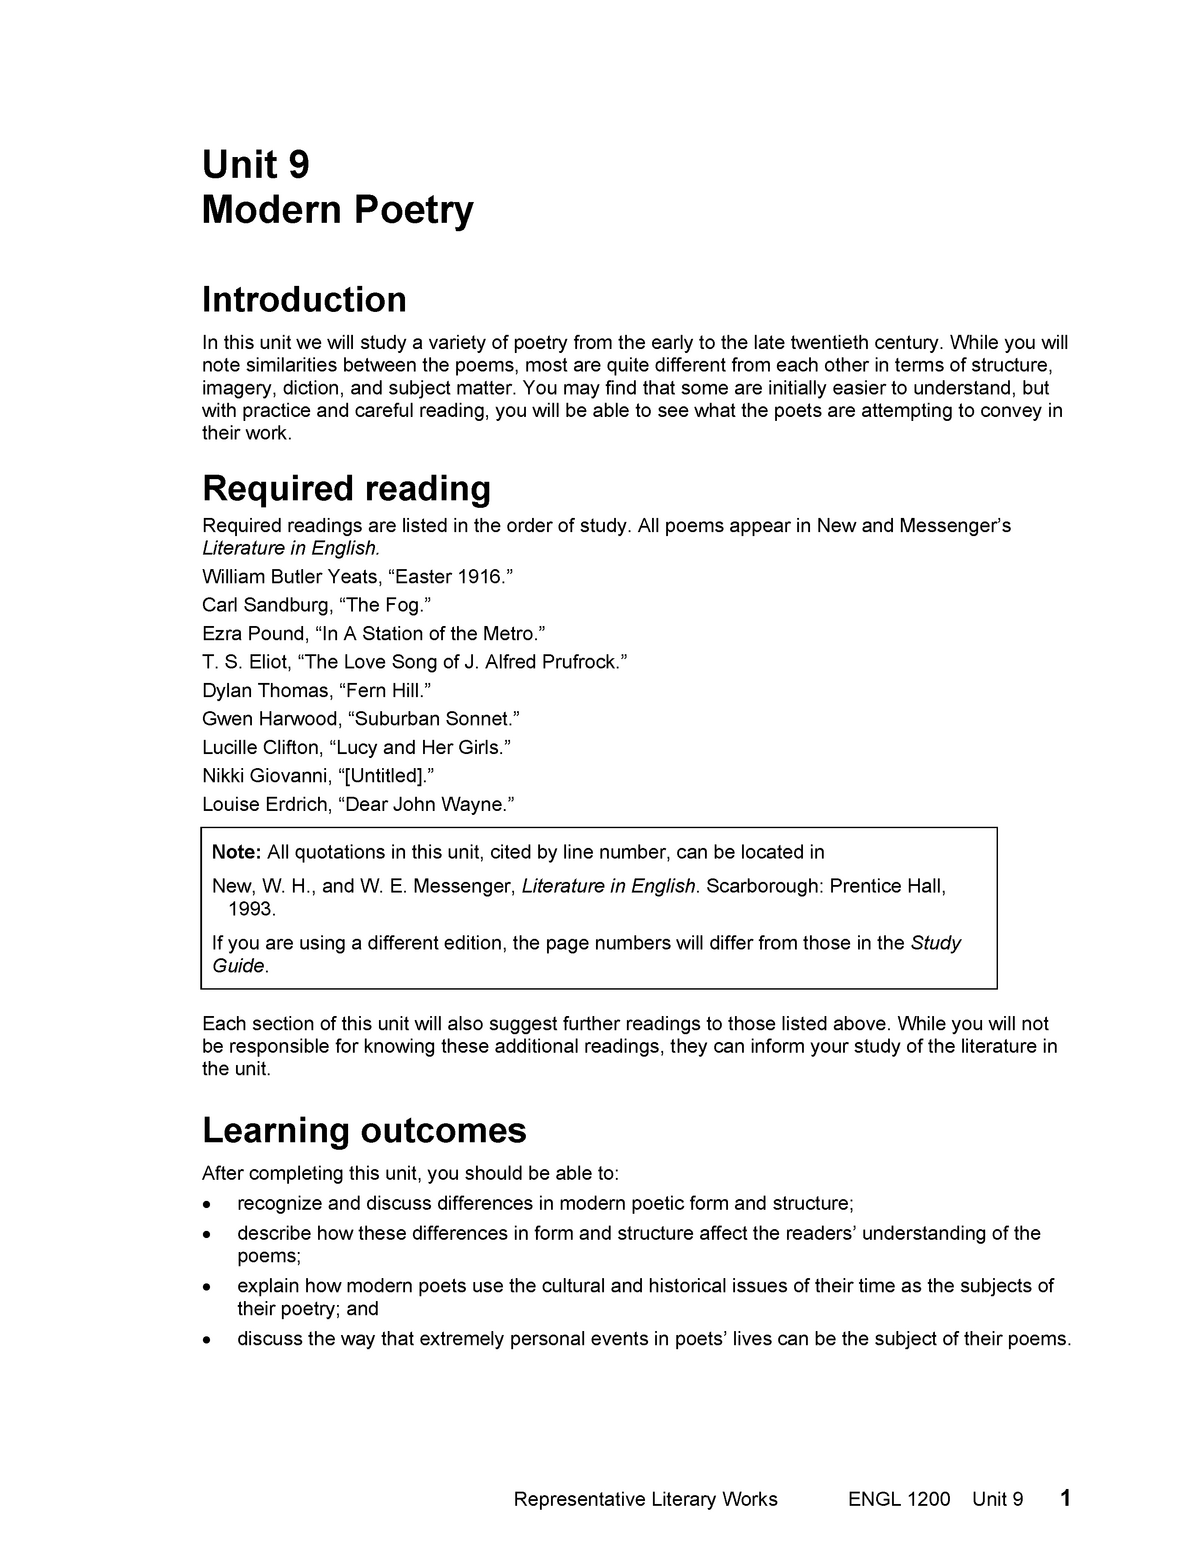 dissertation on modern poetry